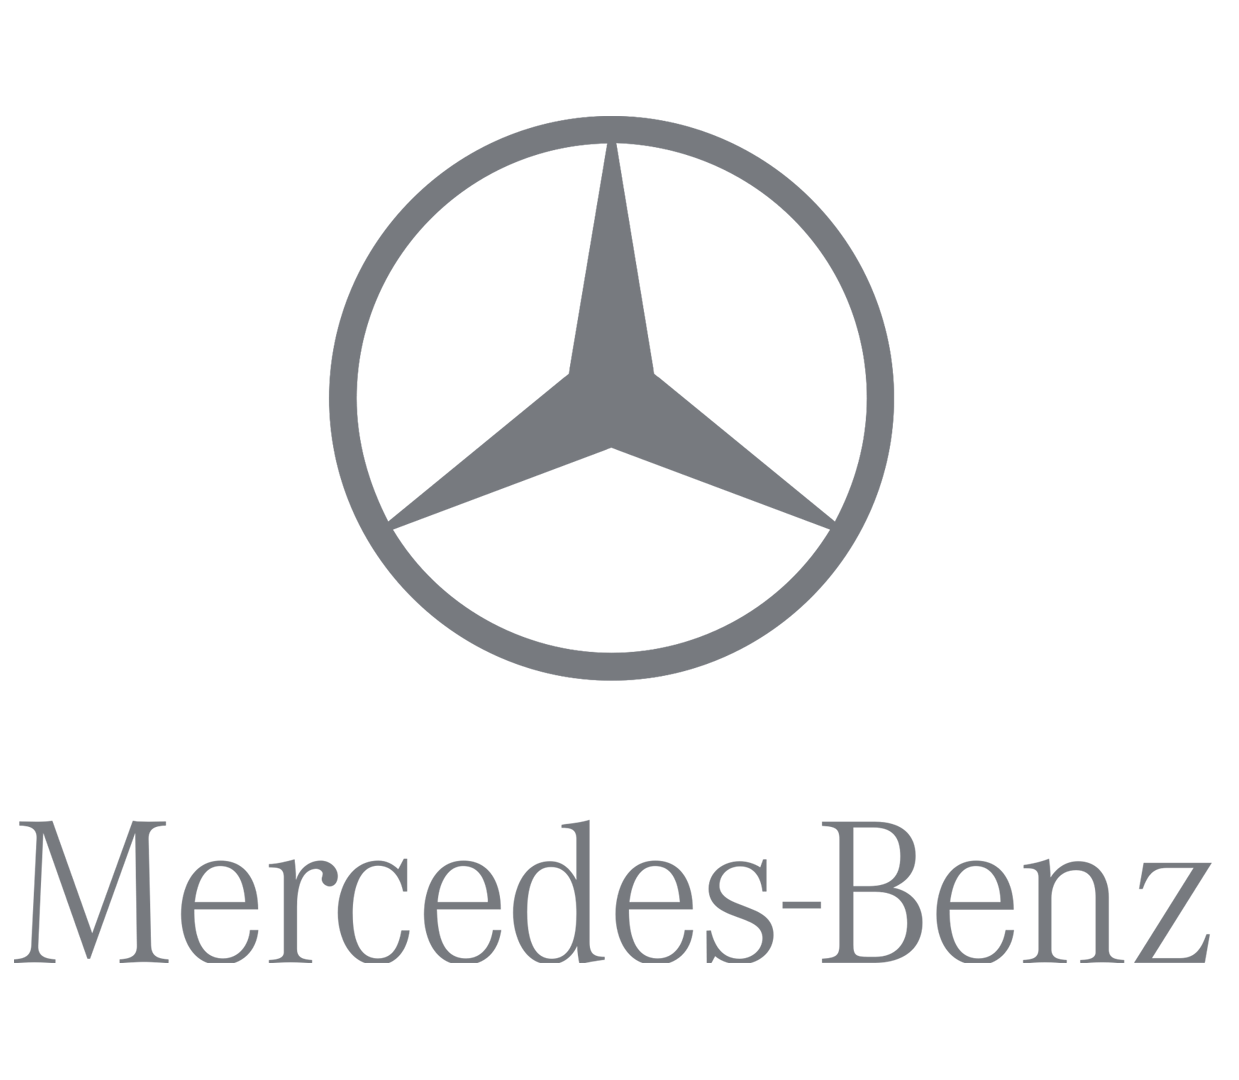 Mercedes-Benz-logo-2009-1920x1080.png